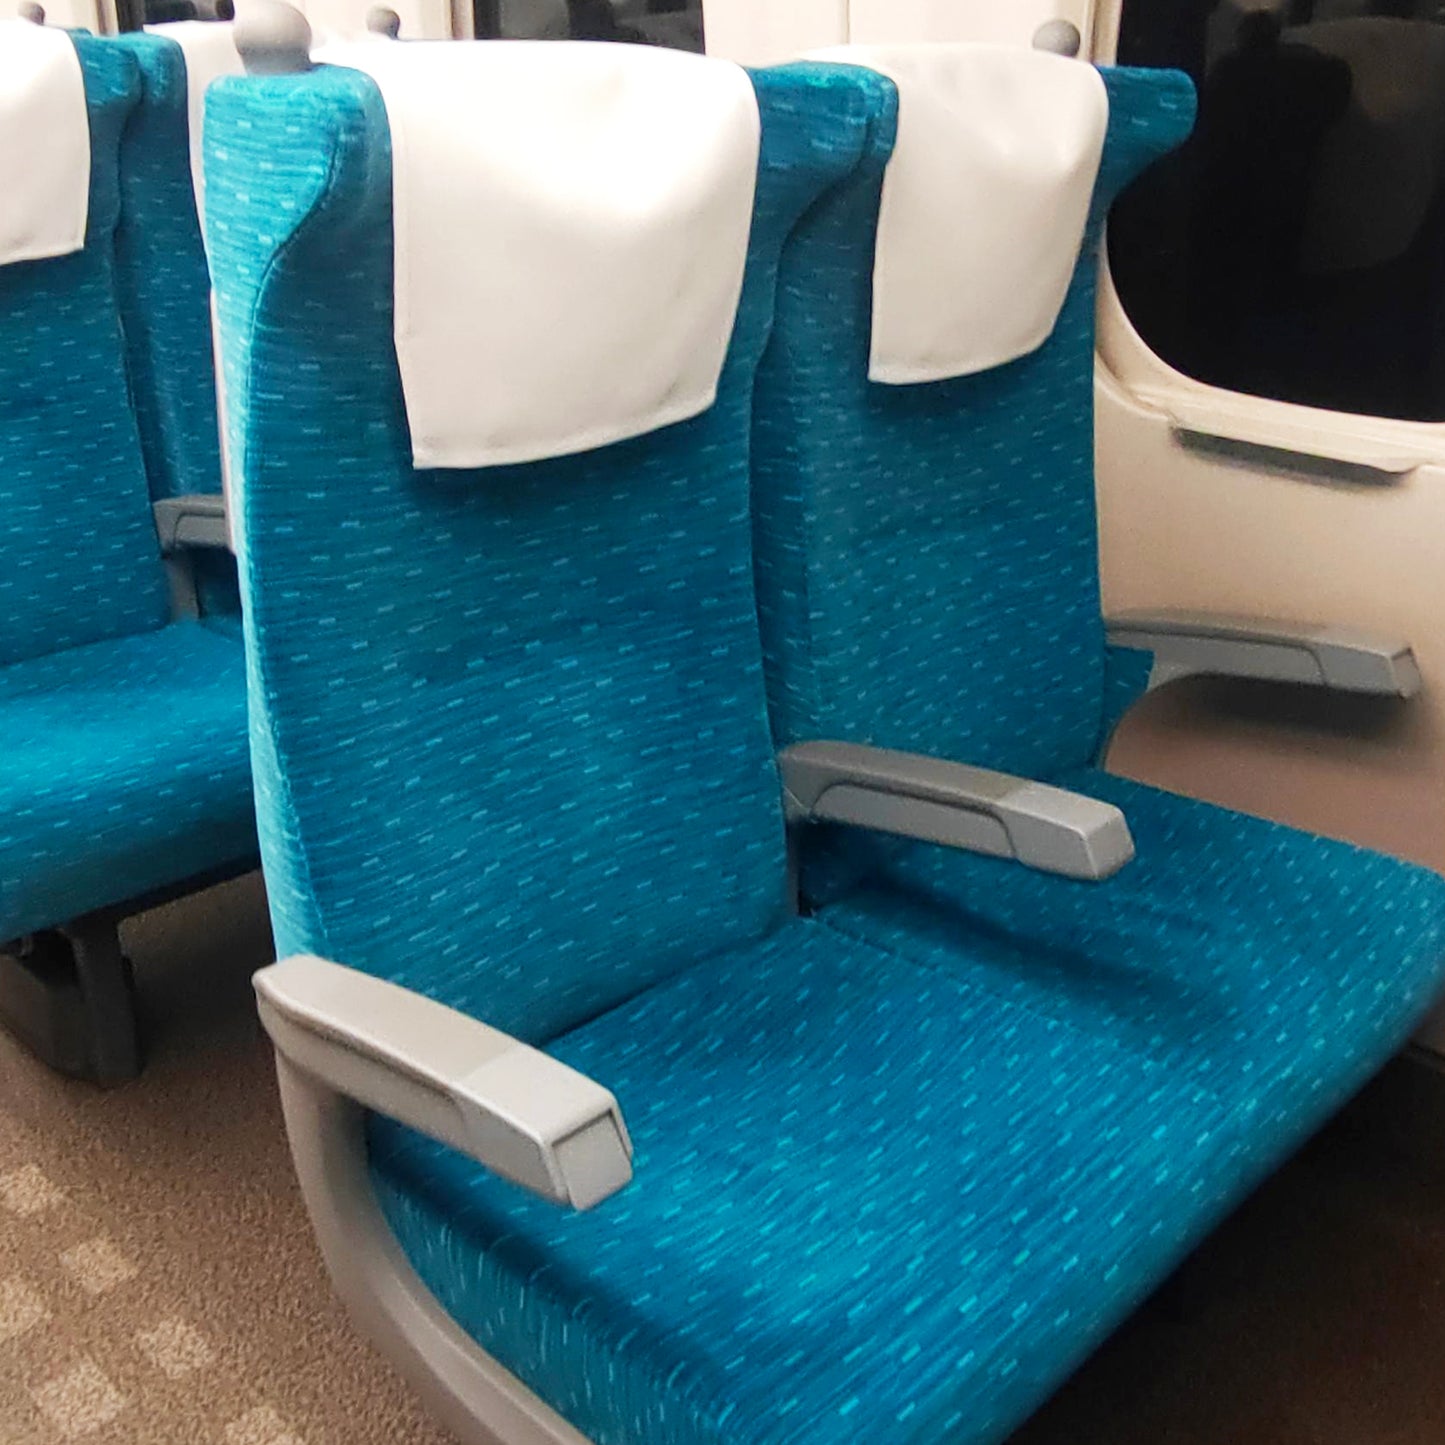 N700A東海道新幹線モケットスマホショルダーの本体素材には、N700A東海道新幹線の座席から取り出された生地を採用しています。